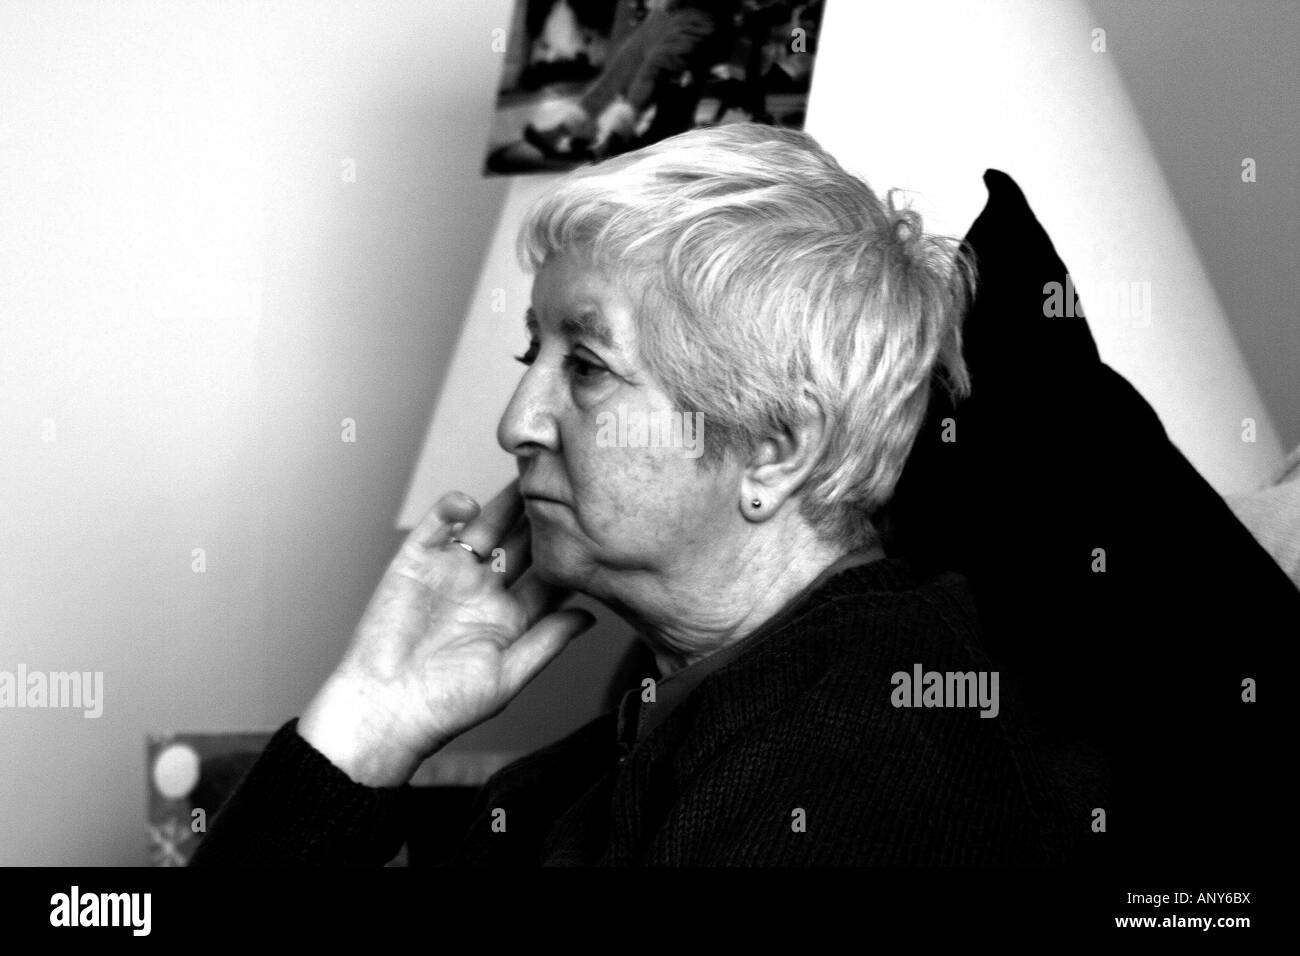 Elderly lady sitting looking reflective, contemplative Stock Photo